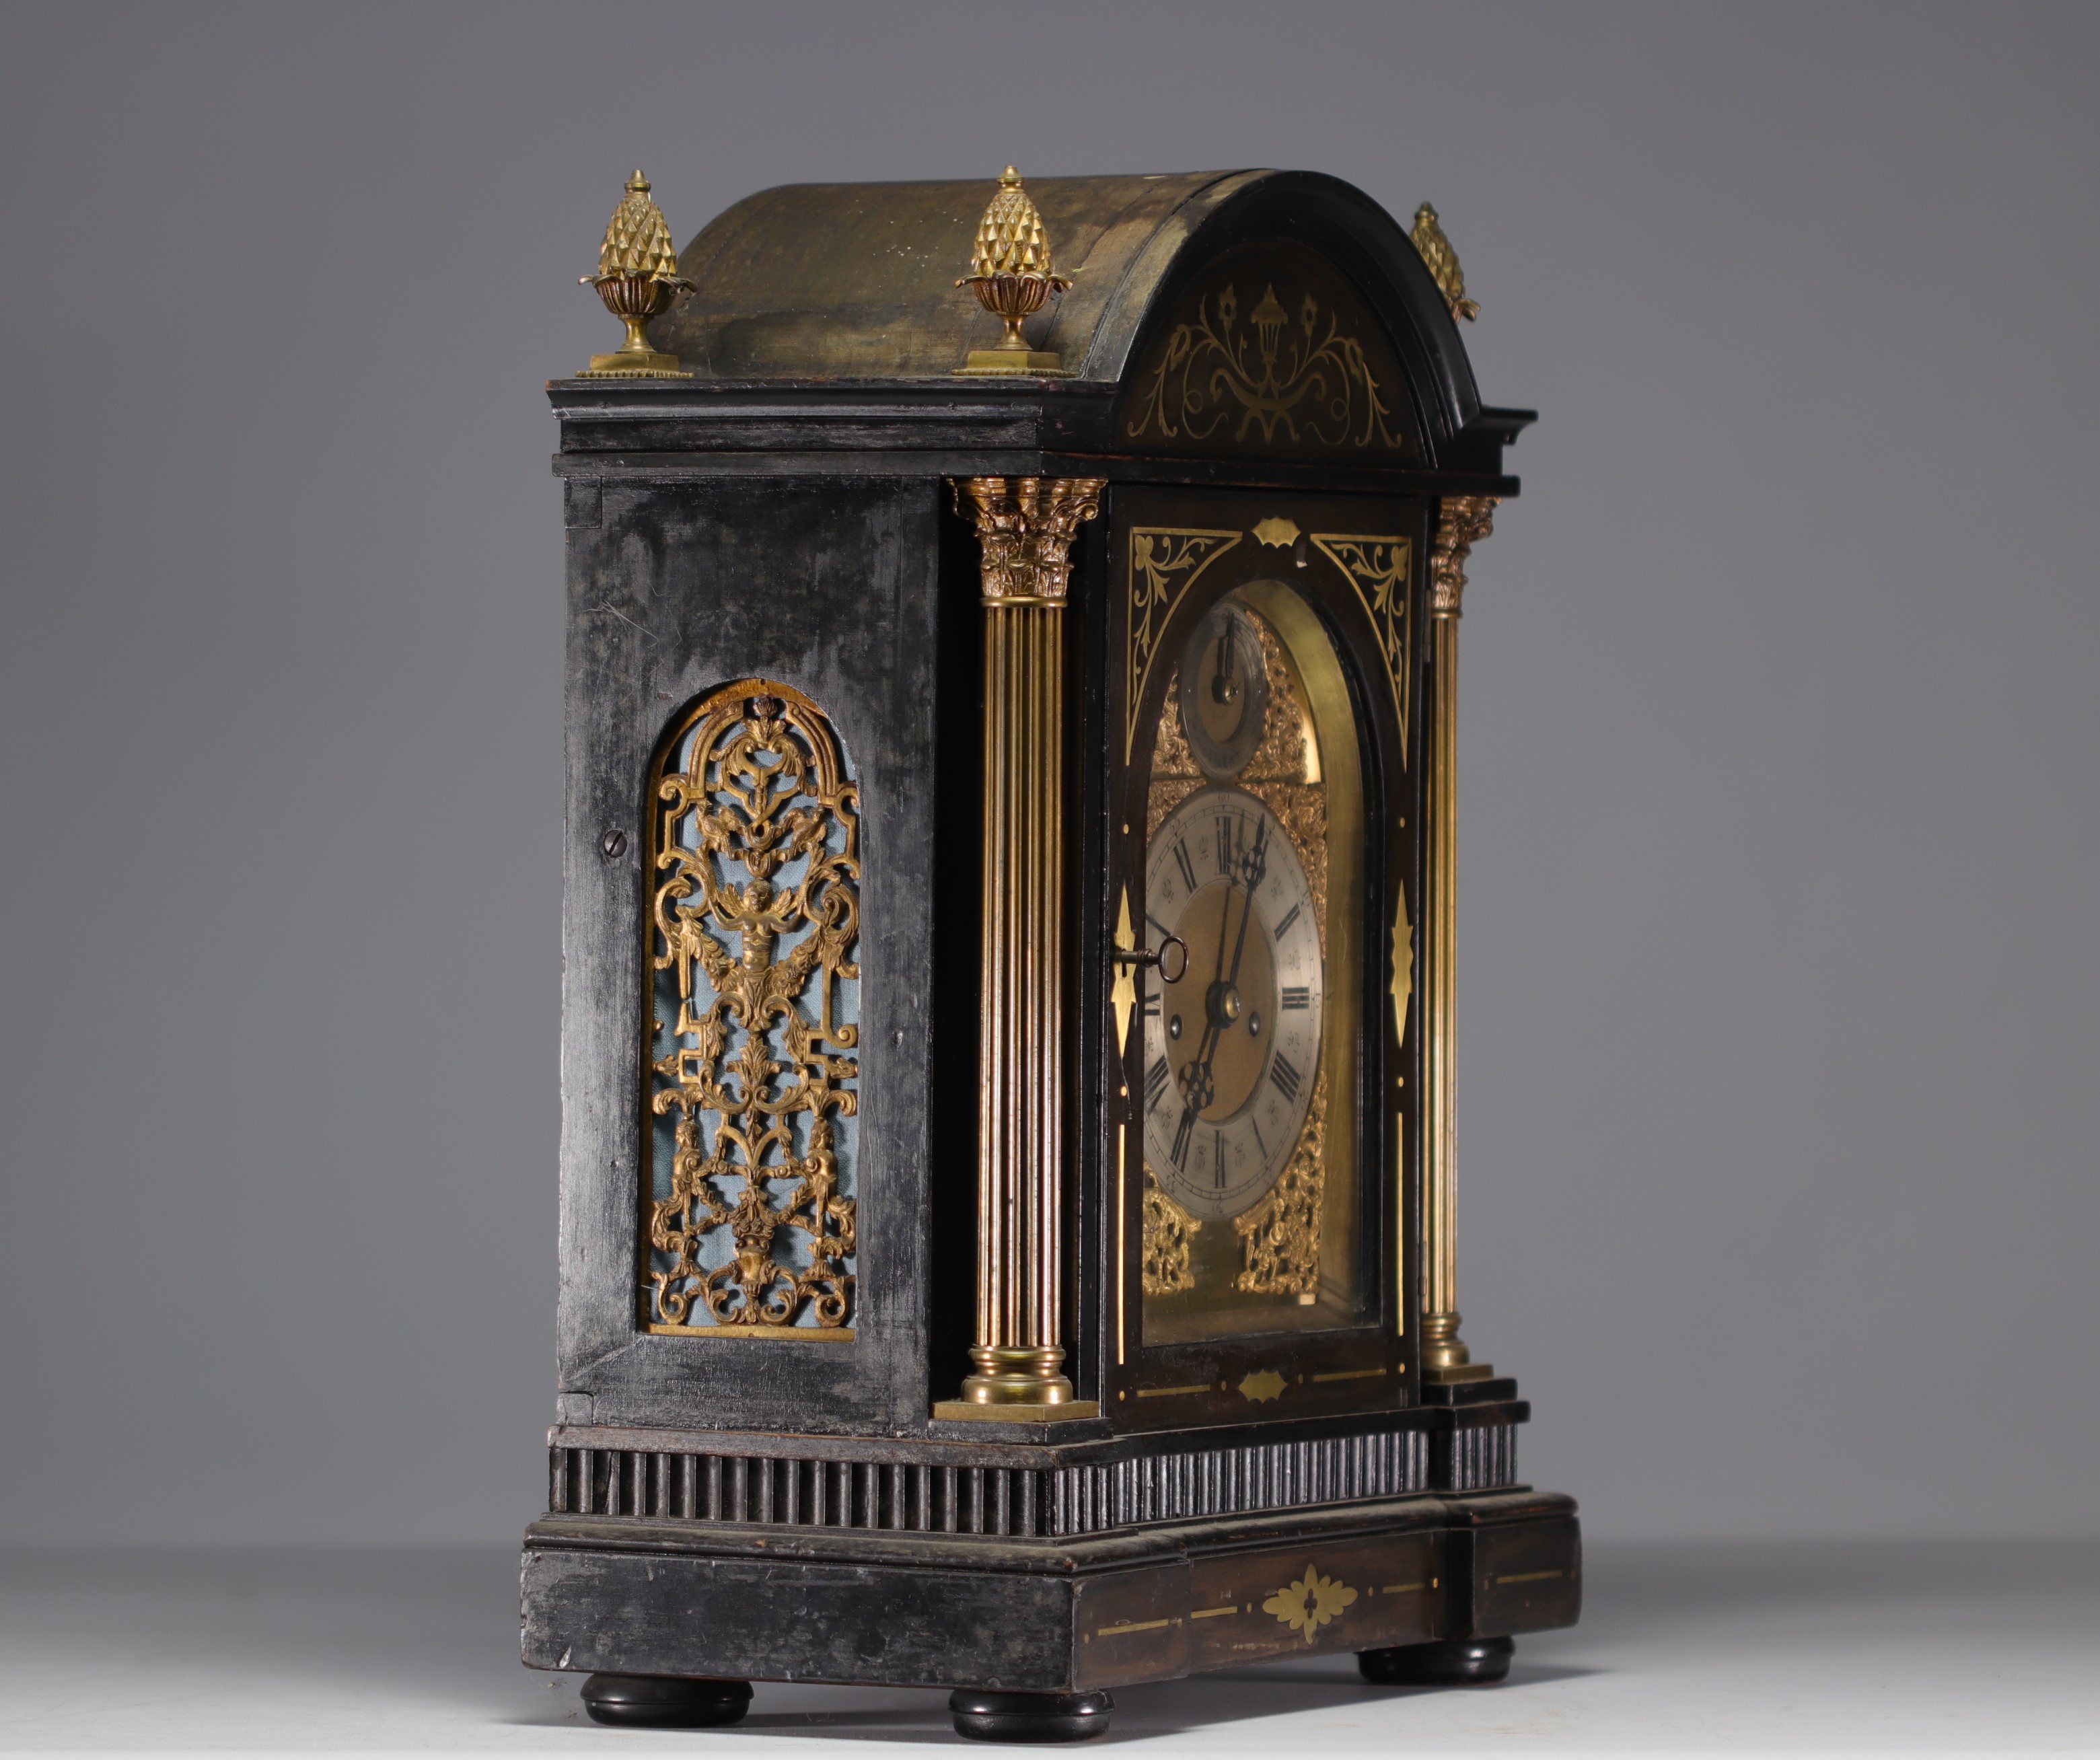 Mantel clock with striking mechanism in veneered wood, bronze and brass, 18th century. - Image 2 of 4